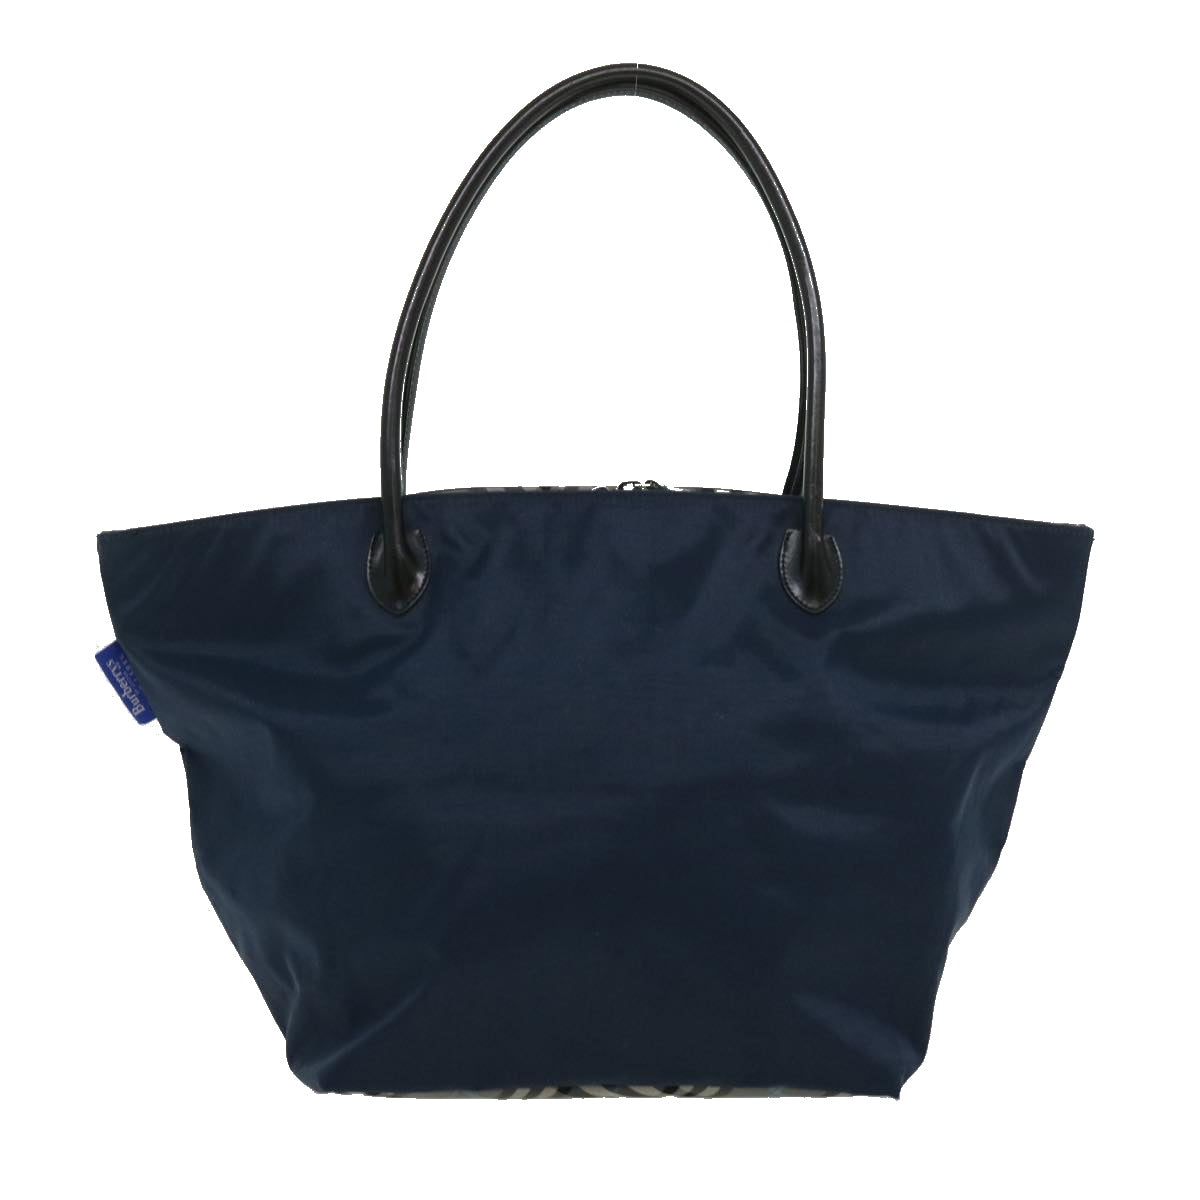 Burberrys Blue Label Nova Check Tote Bag Nylon Navy Auth ki2367